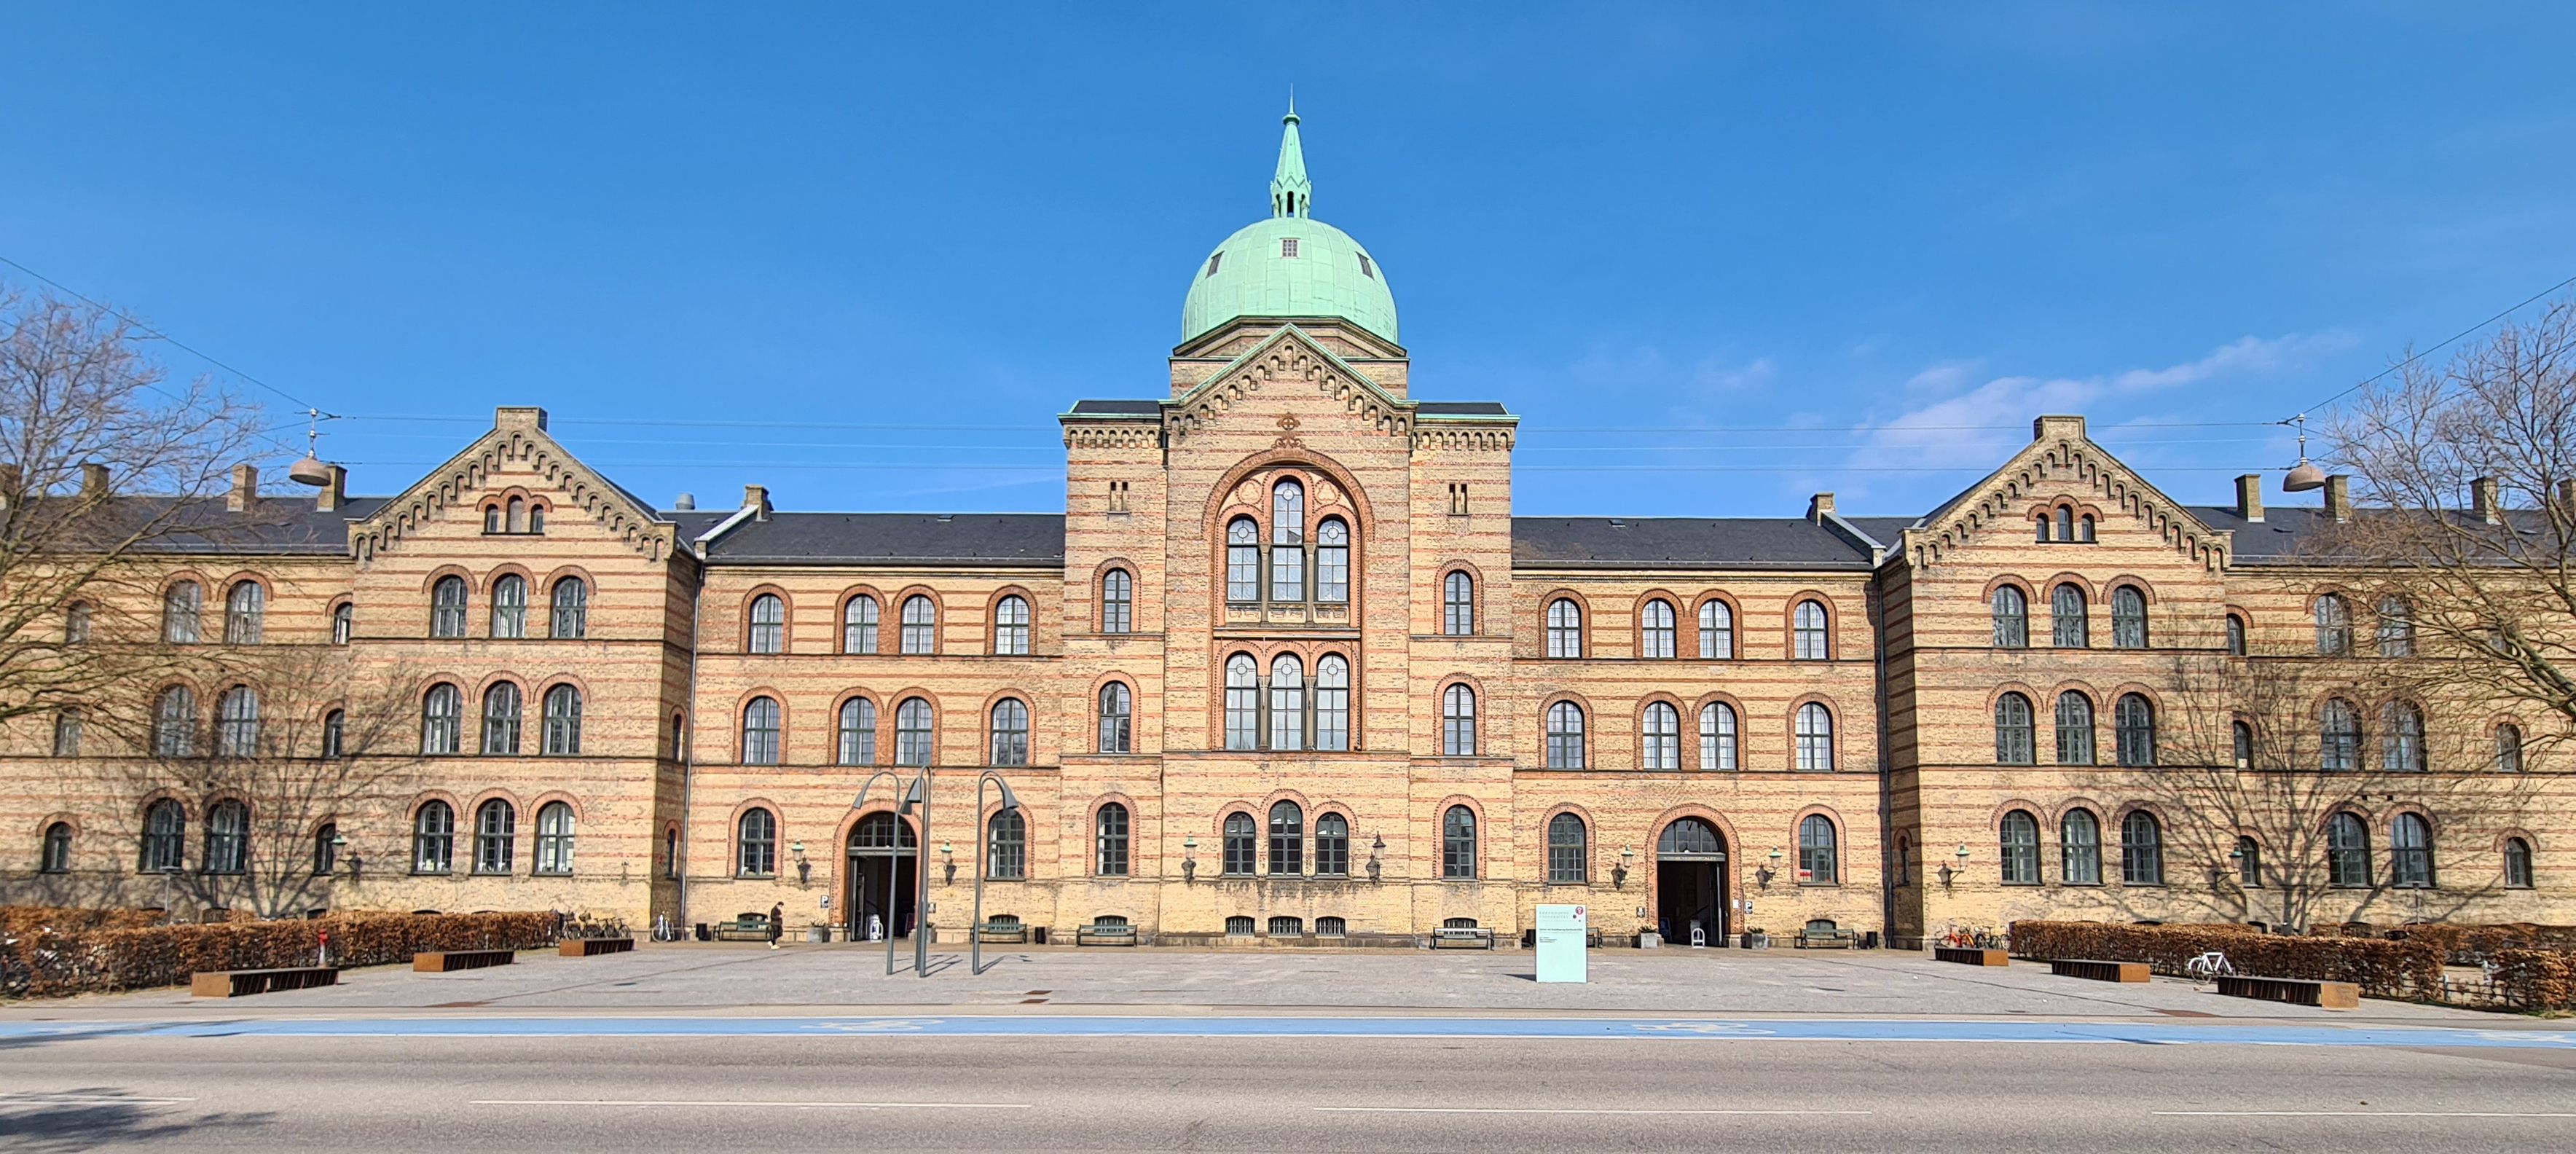 University of Copenhagen suffers huge drop in prestigious rankings